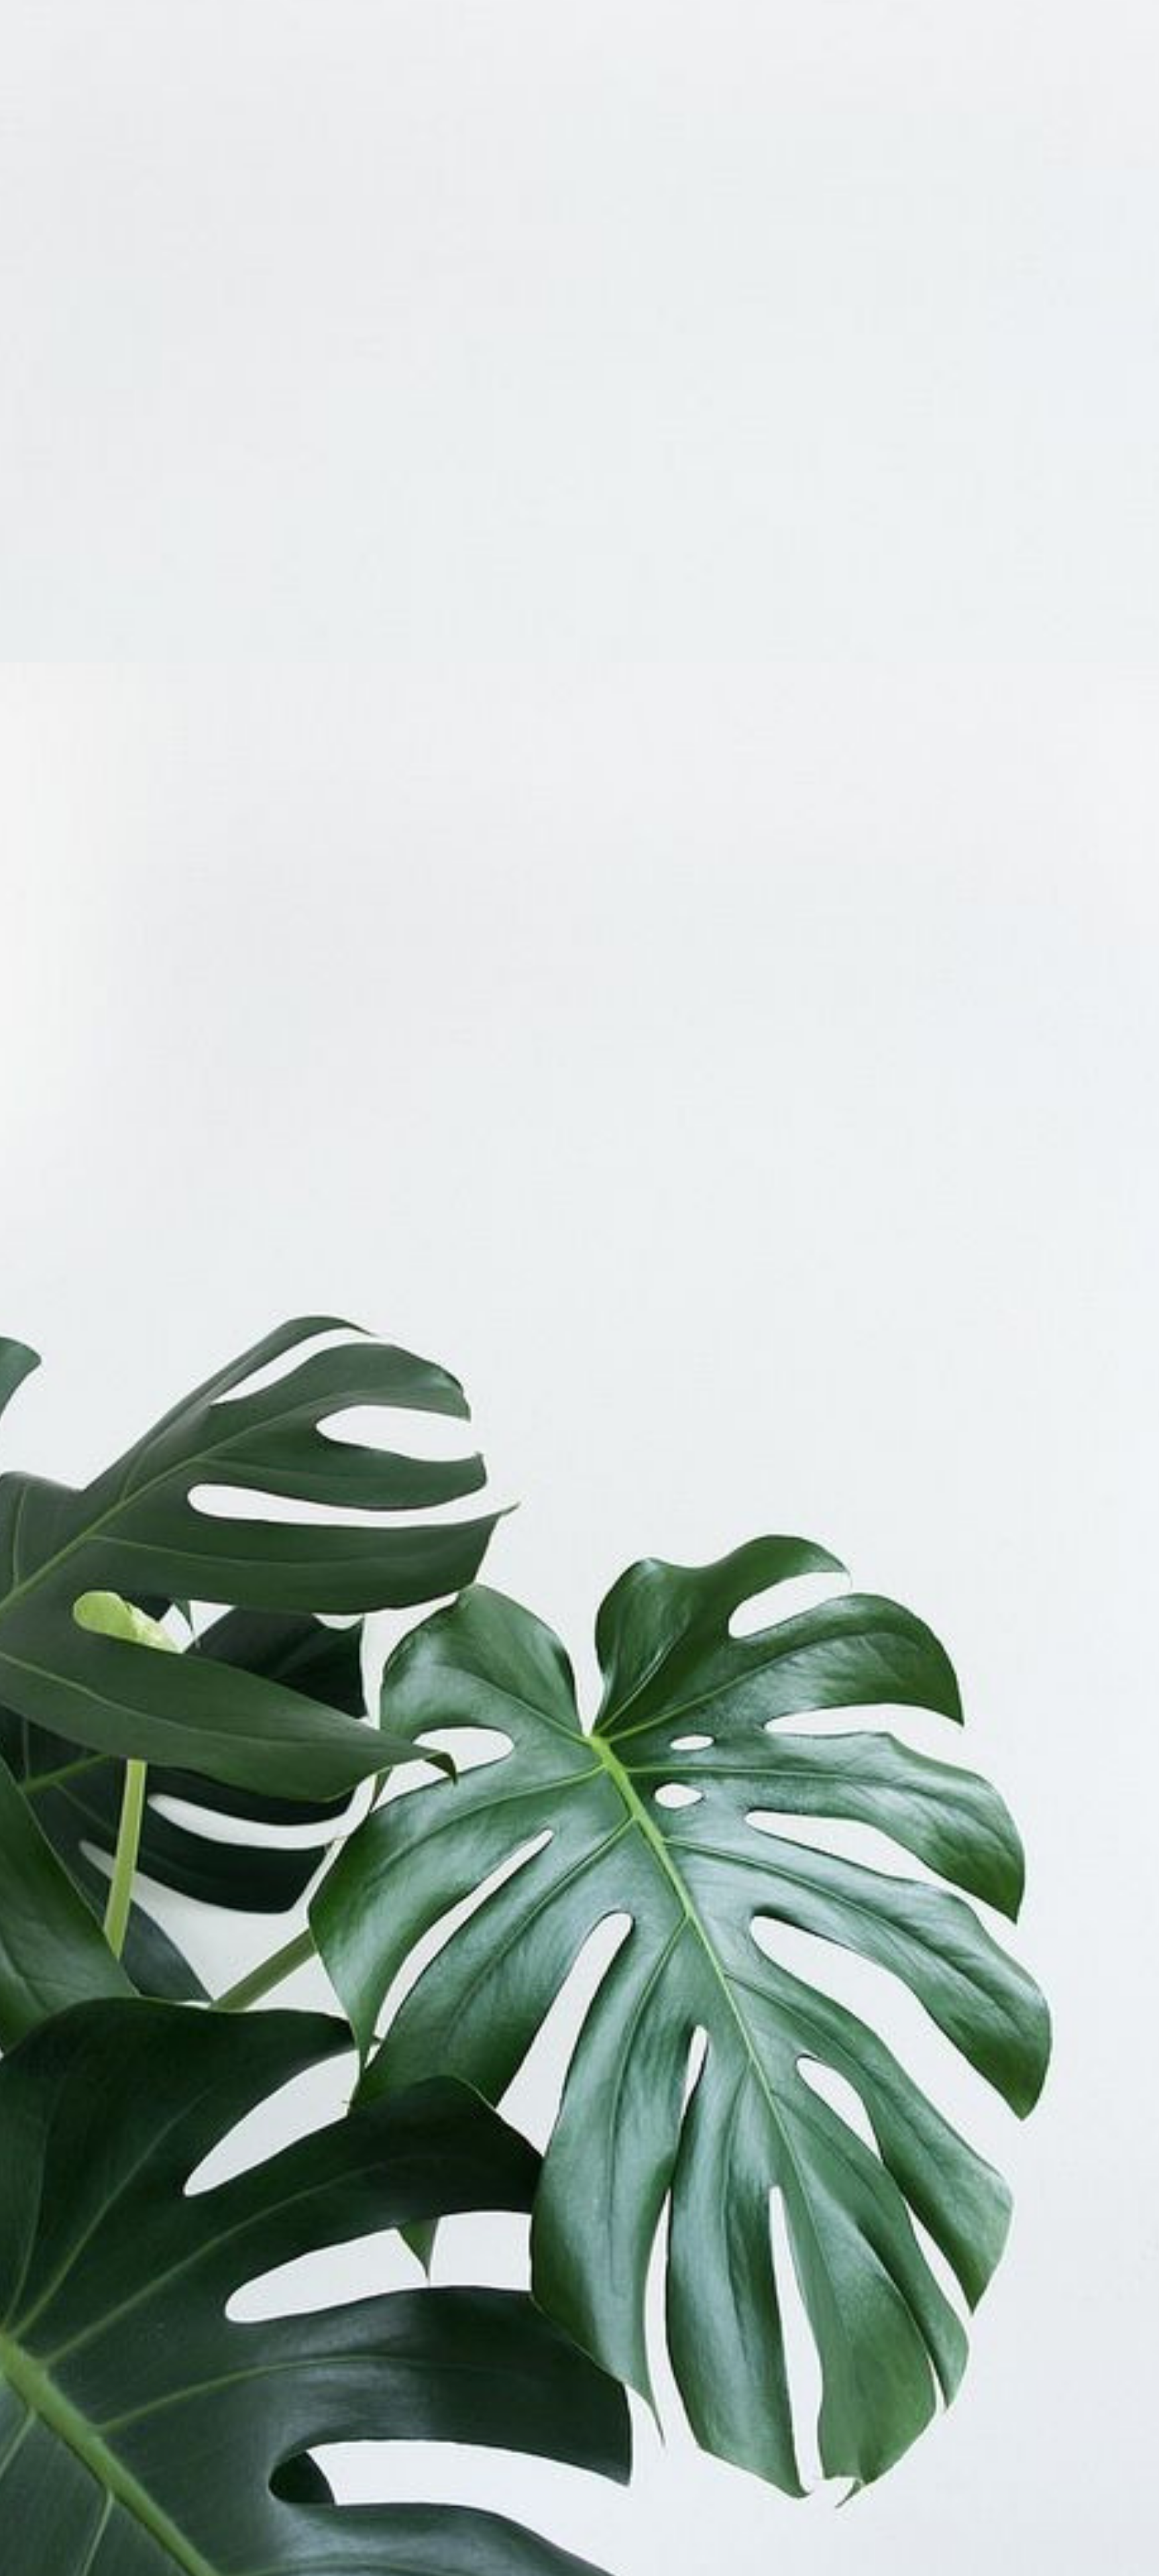 HD Aesthetic Minimal Plant Phone Background. Plant wallpaper